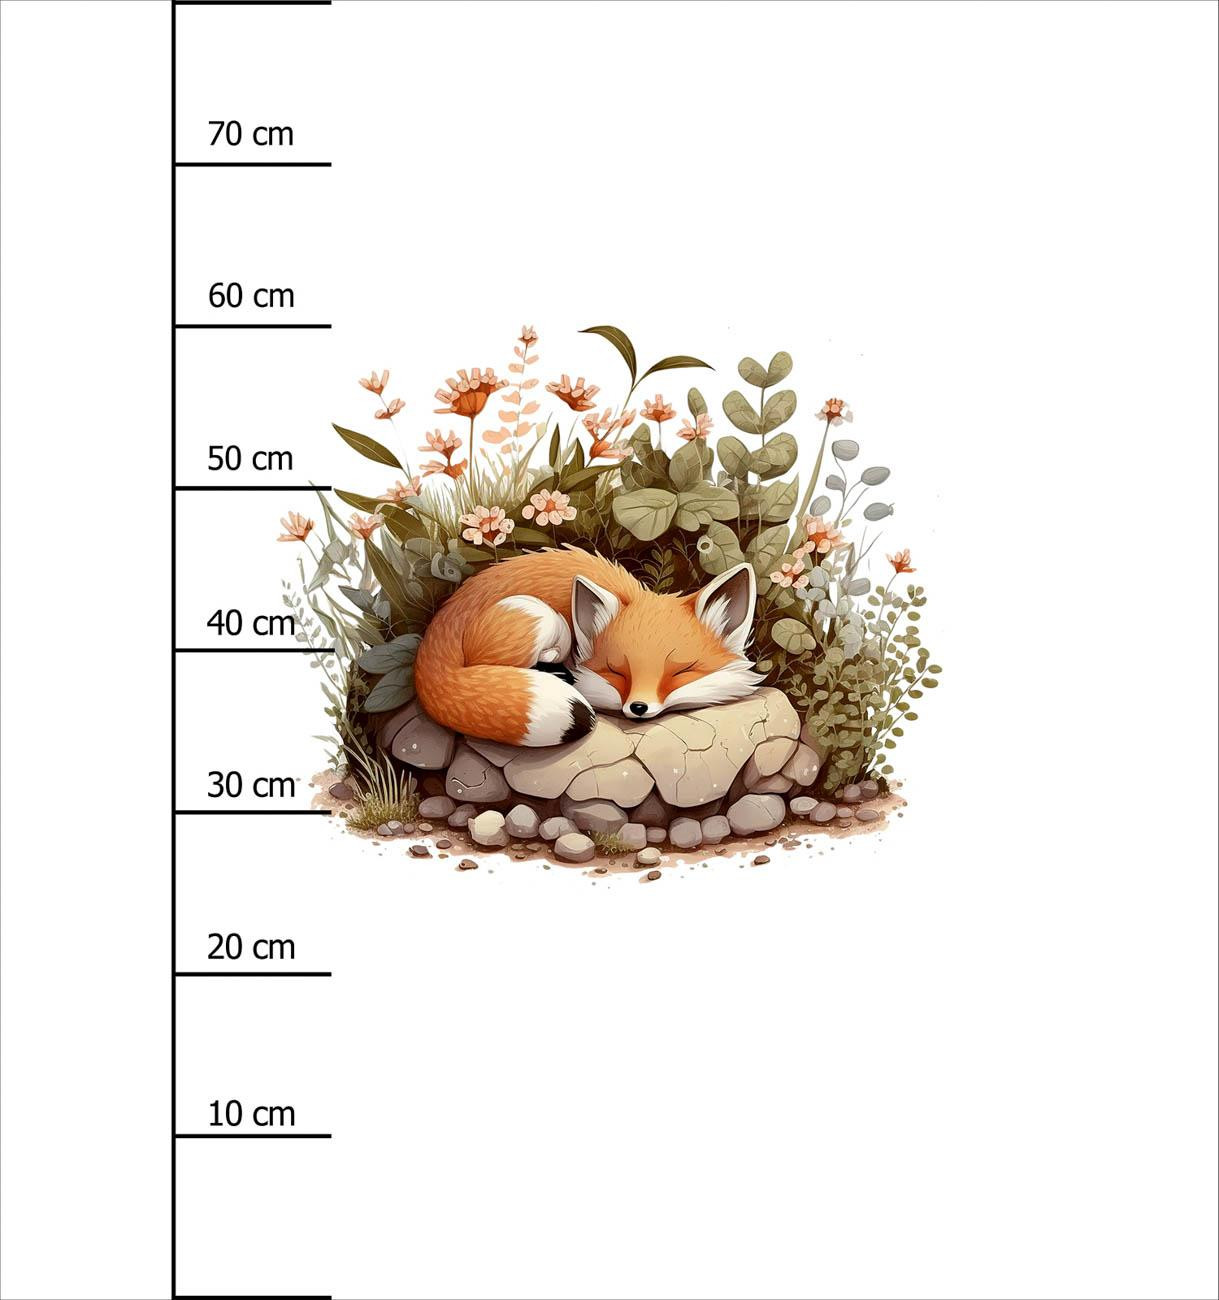 SLEEPING FOX - panel (75cm x 80cm) SINGLE JERSEY